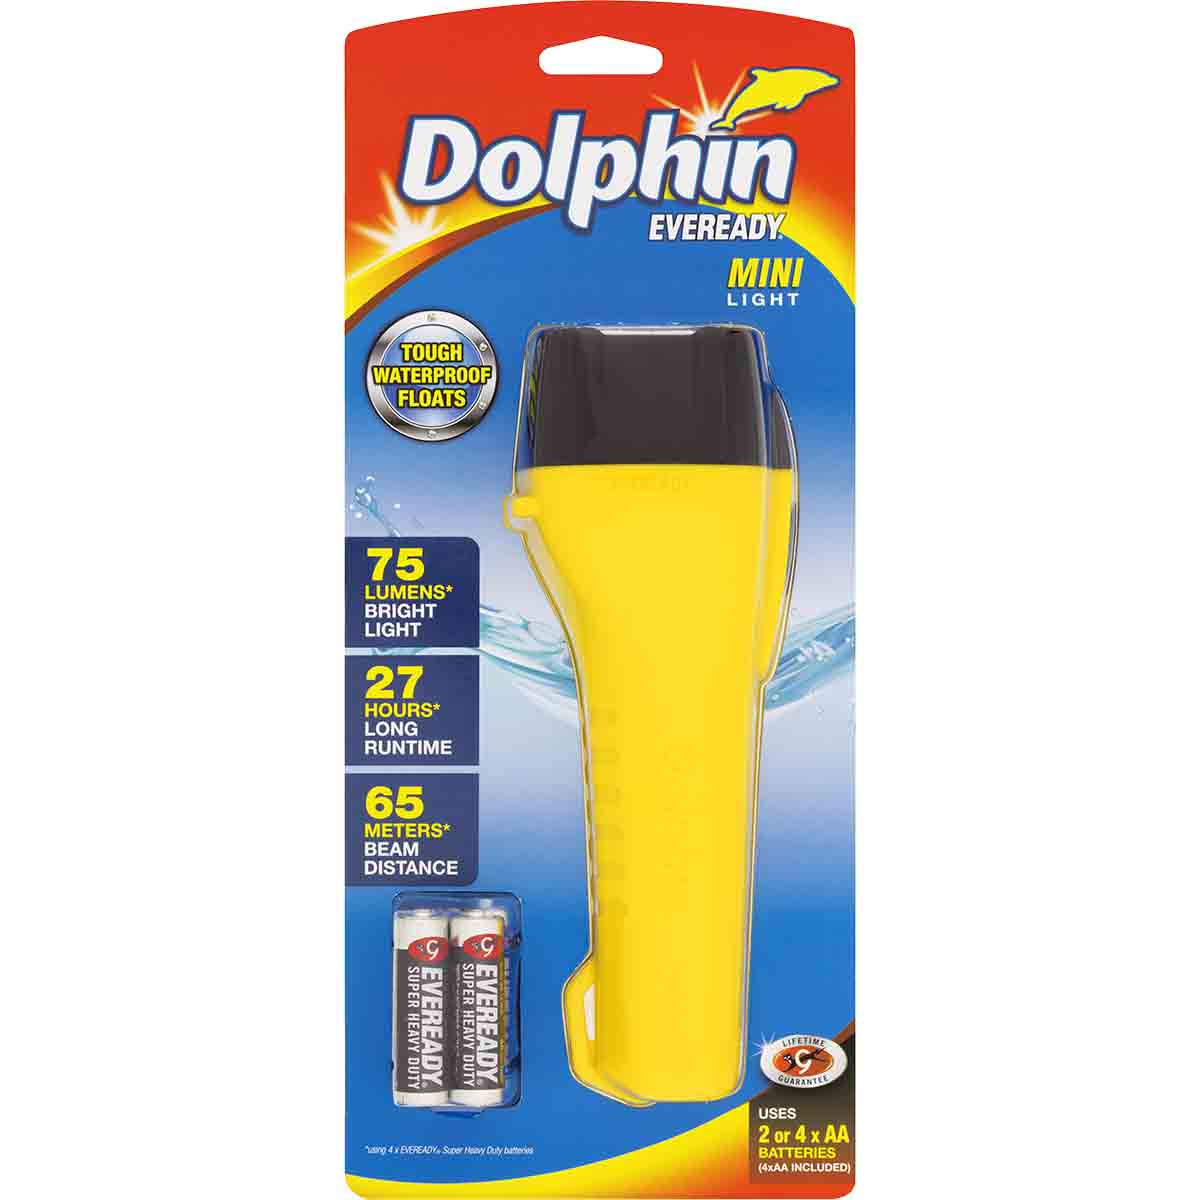 Eveready Dolphin Mini 4AA Torch